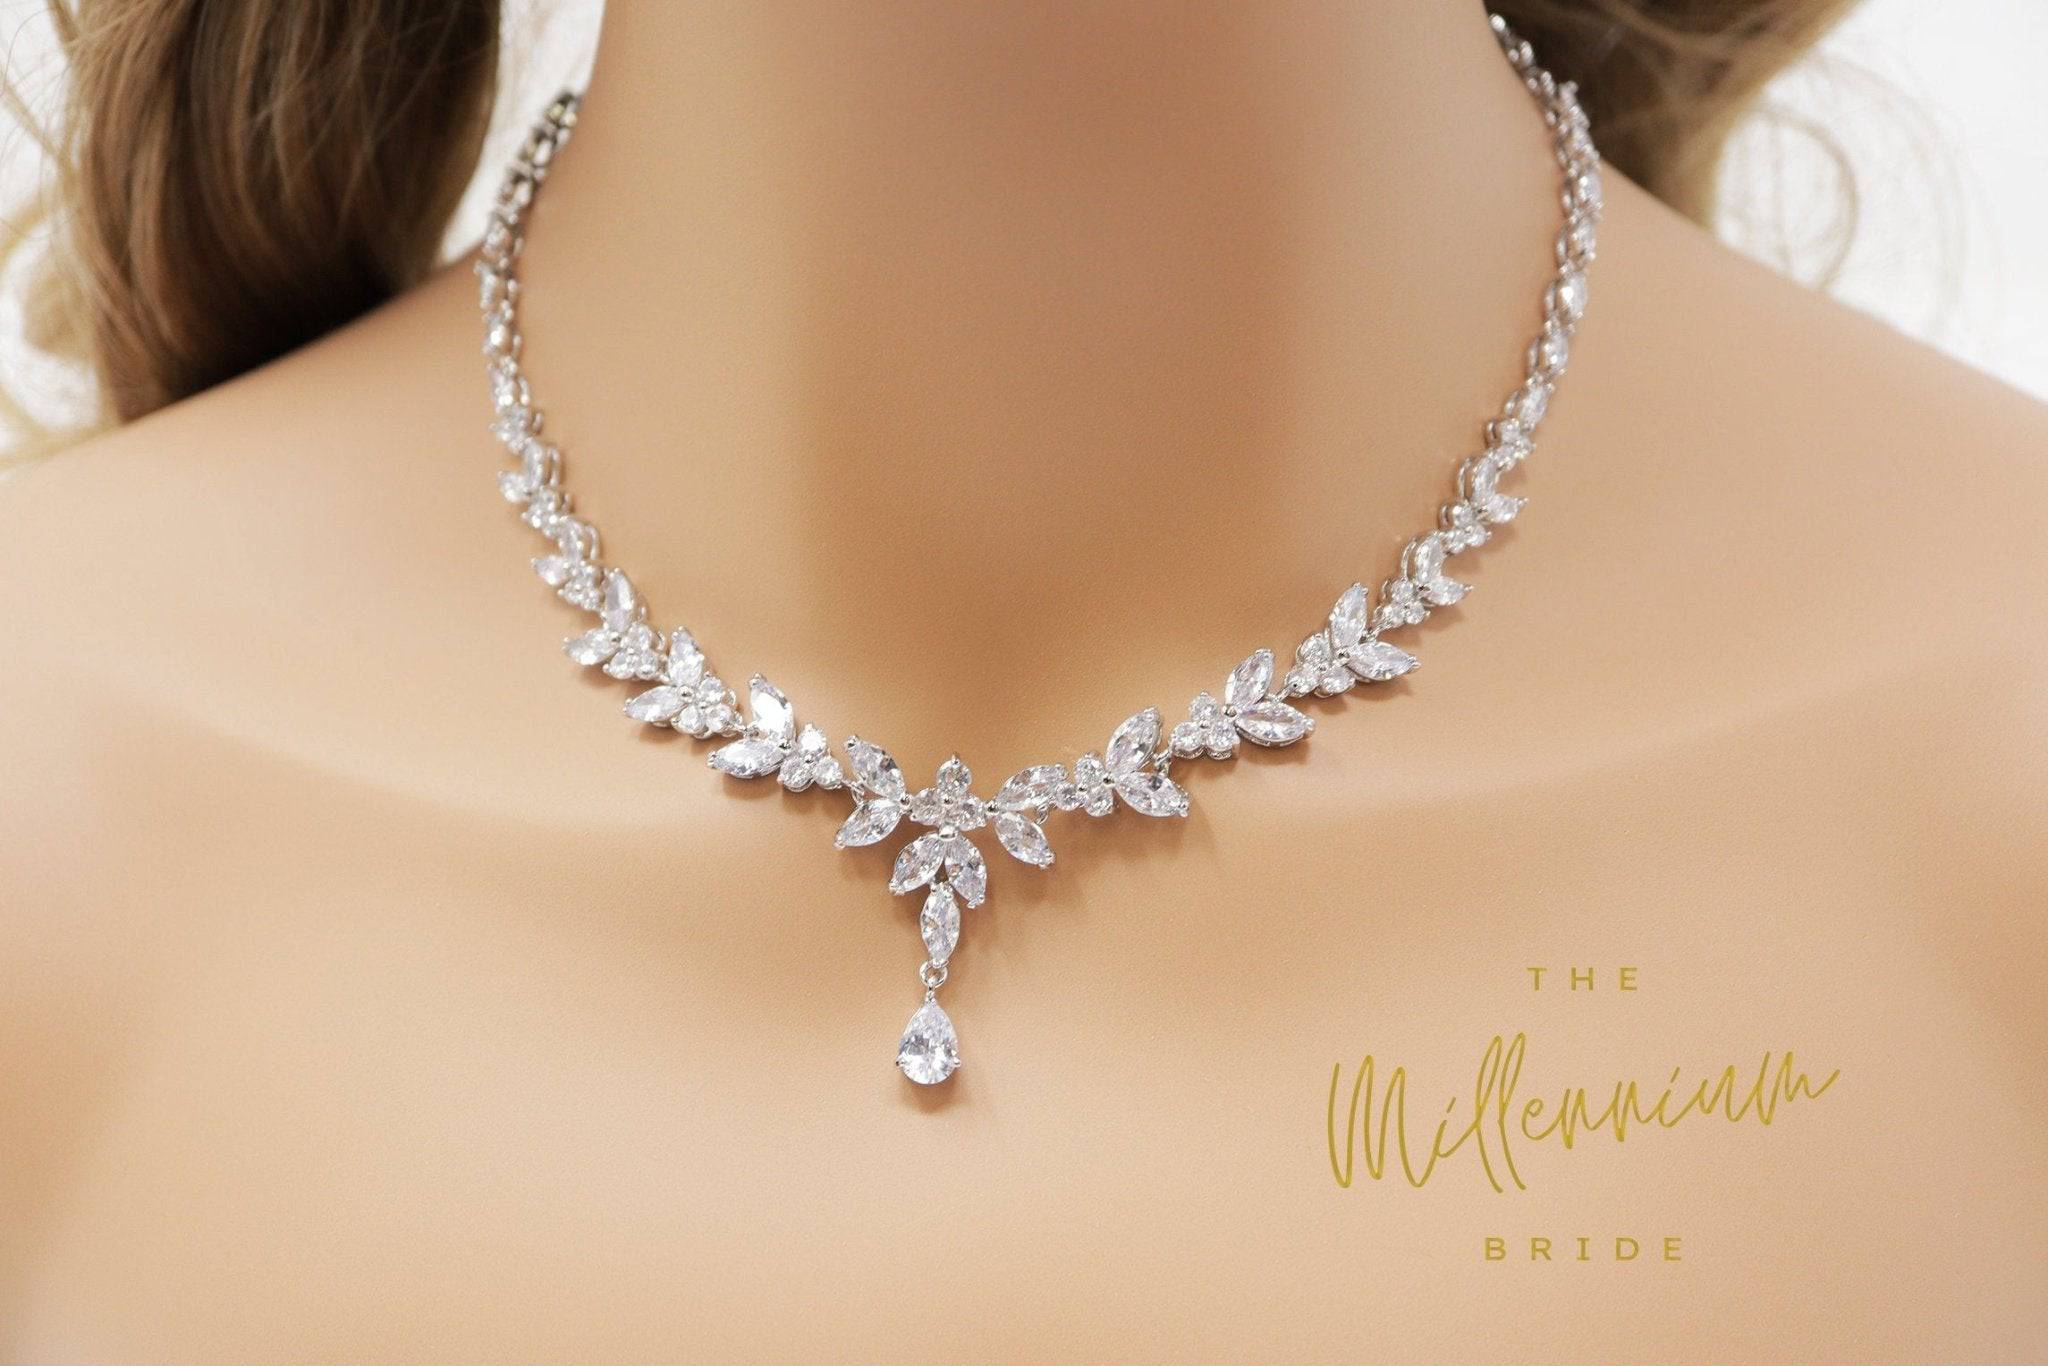 Swarovski Crystal Luxury Flower Diamond/Crystal Necklace, Bridal